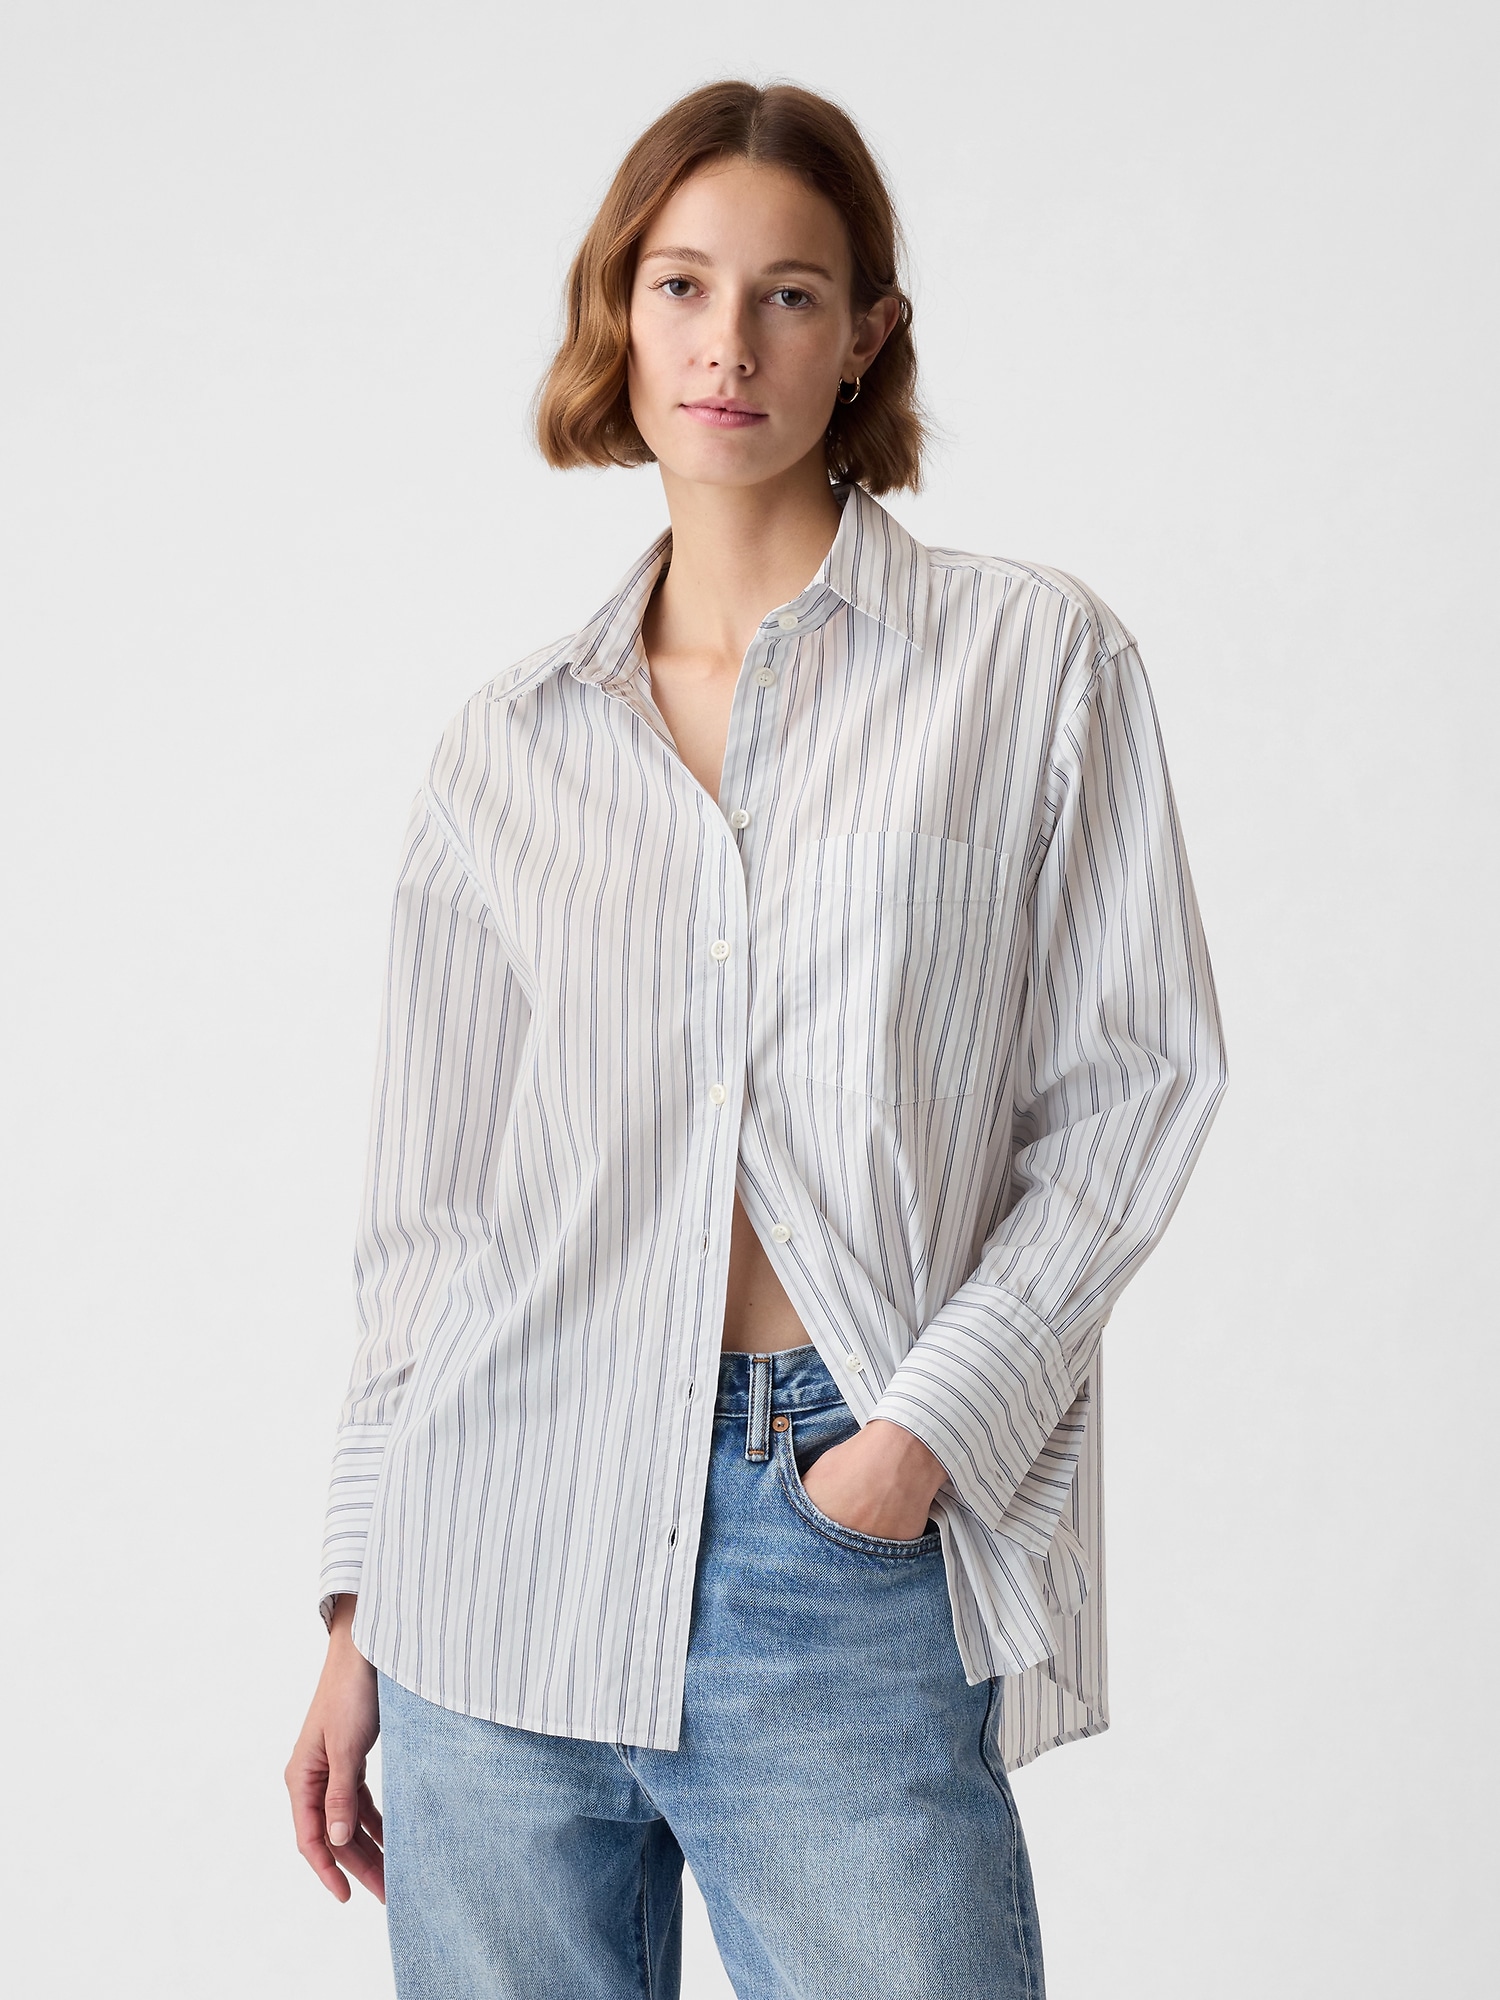 Gap Organic Cotton Big Shirt In White & Blue Stripe